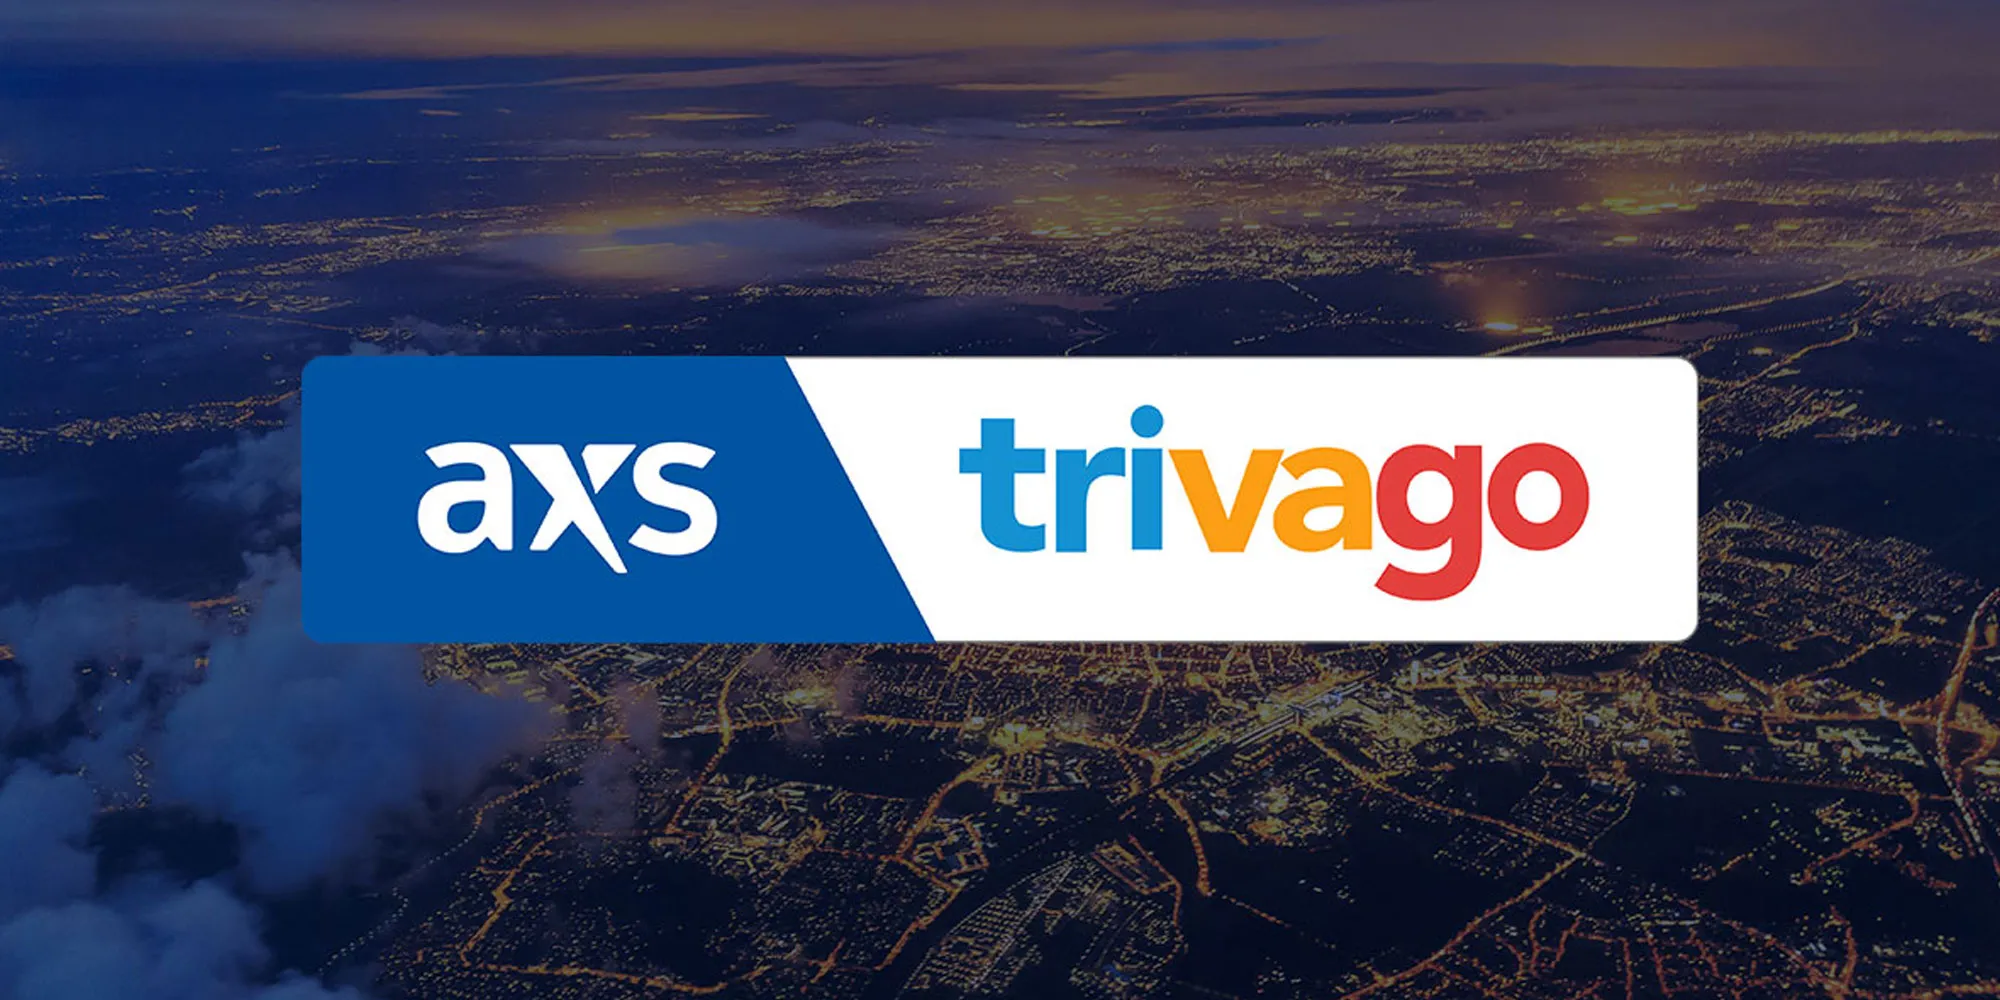 AXS and trivago partnership logo